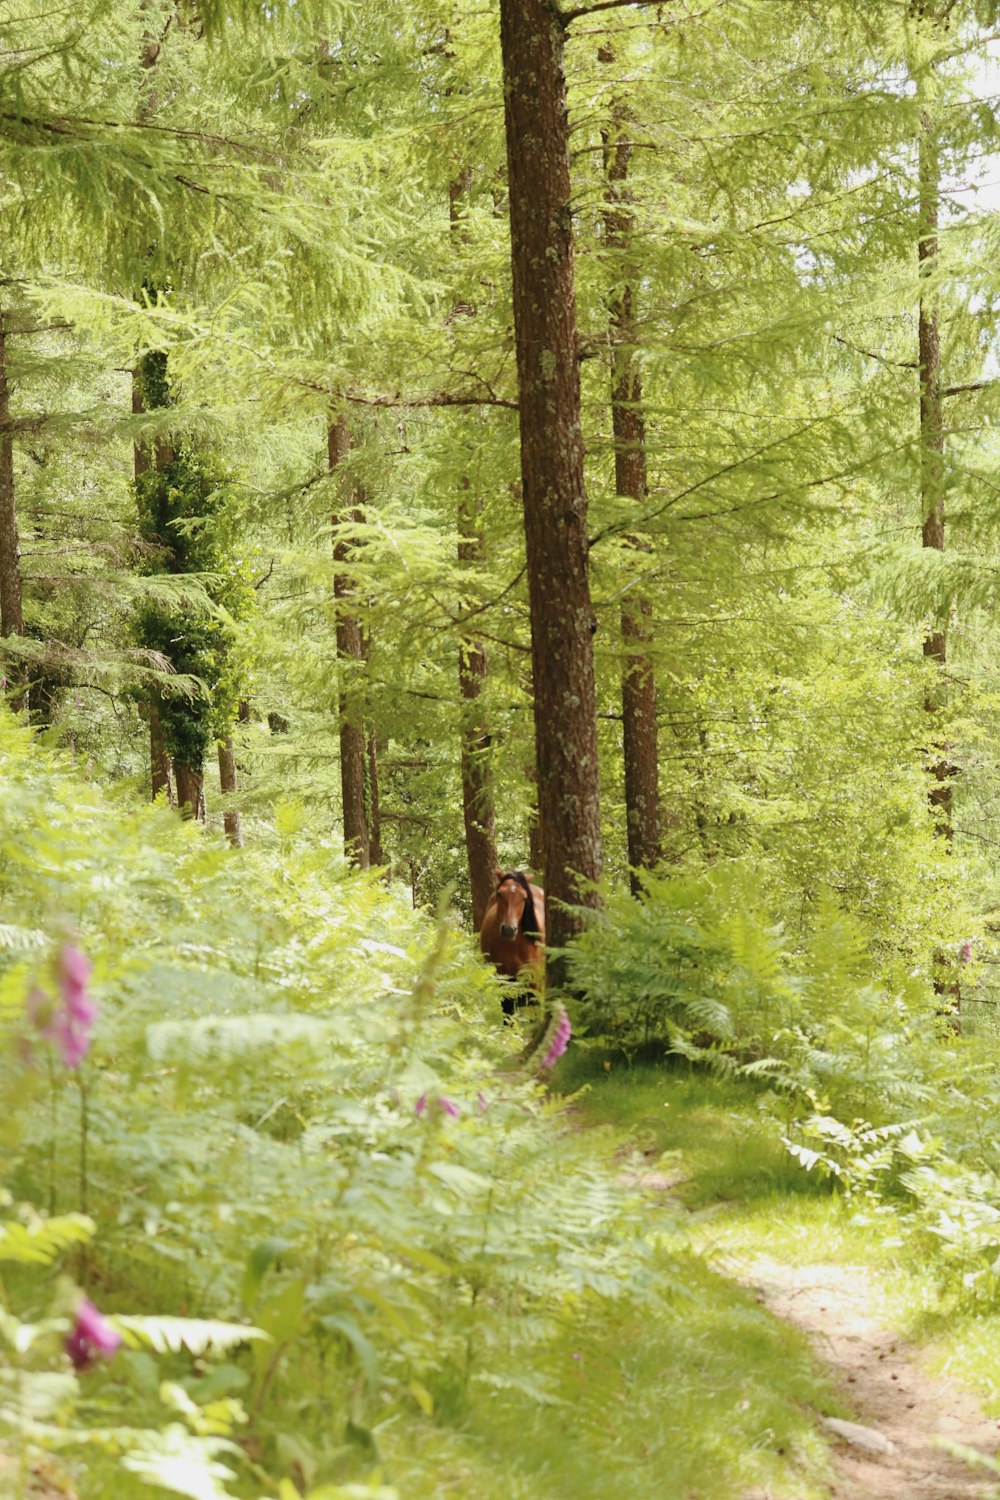 a bear walking through a lush green forest